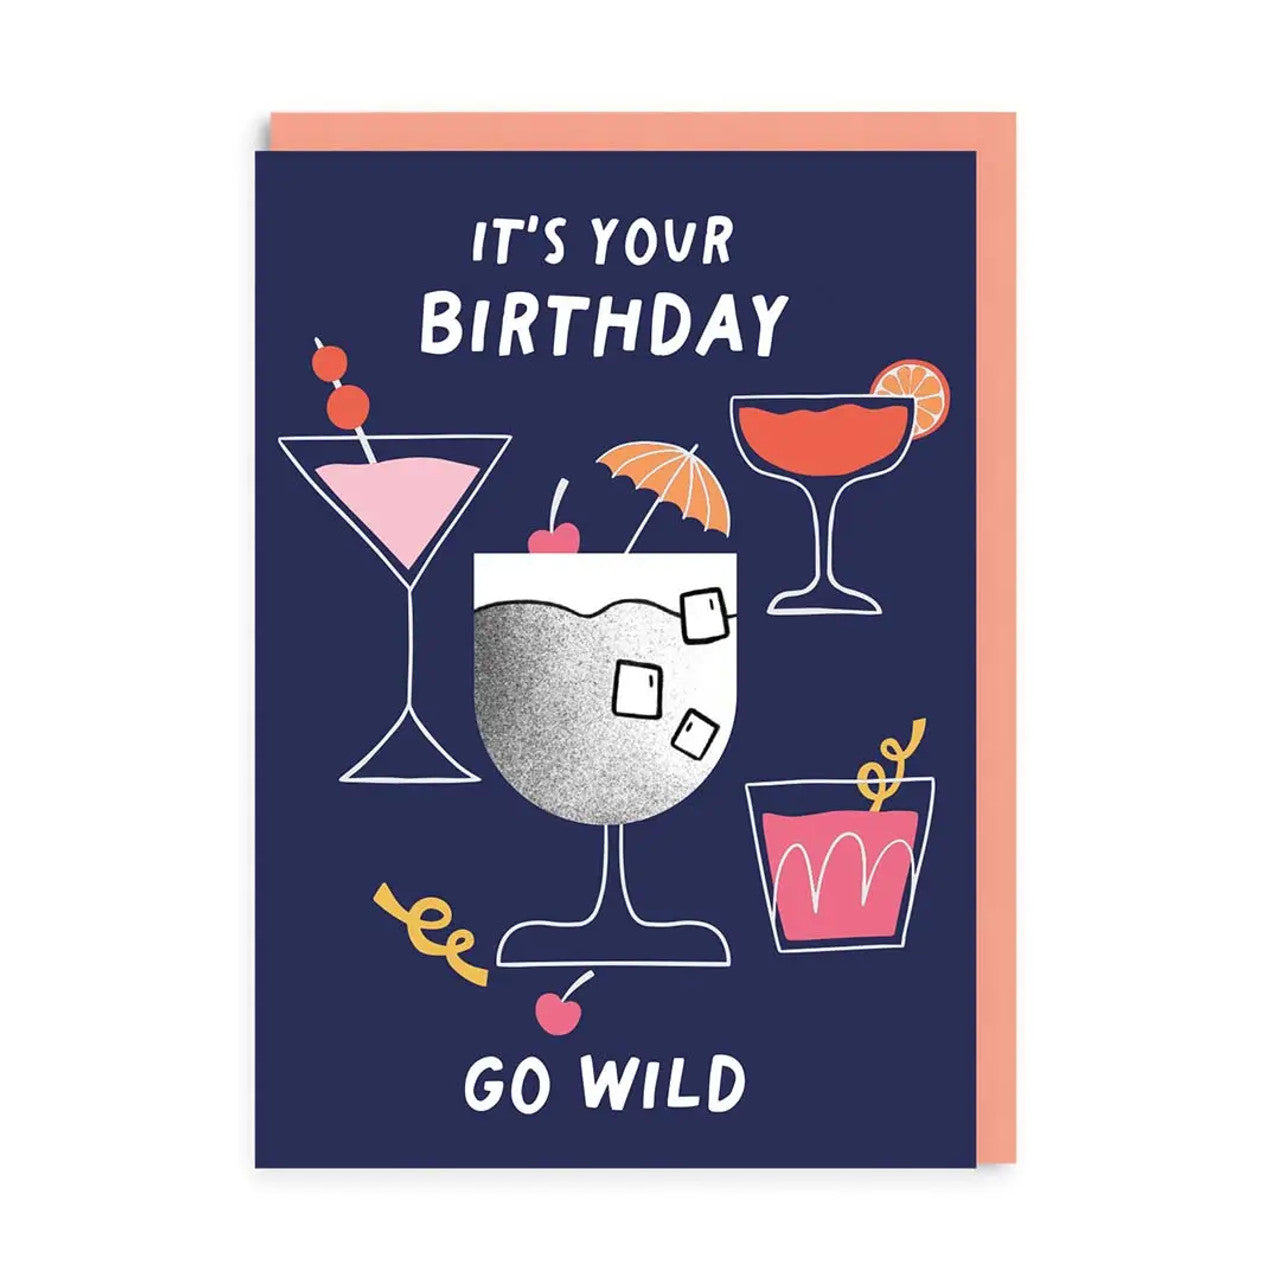 Birthday Card text reads "It's your Birthday Go Wild"